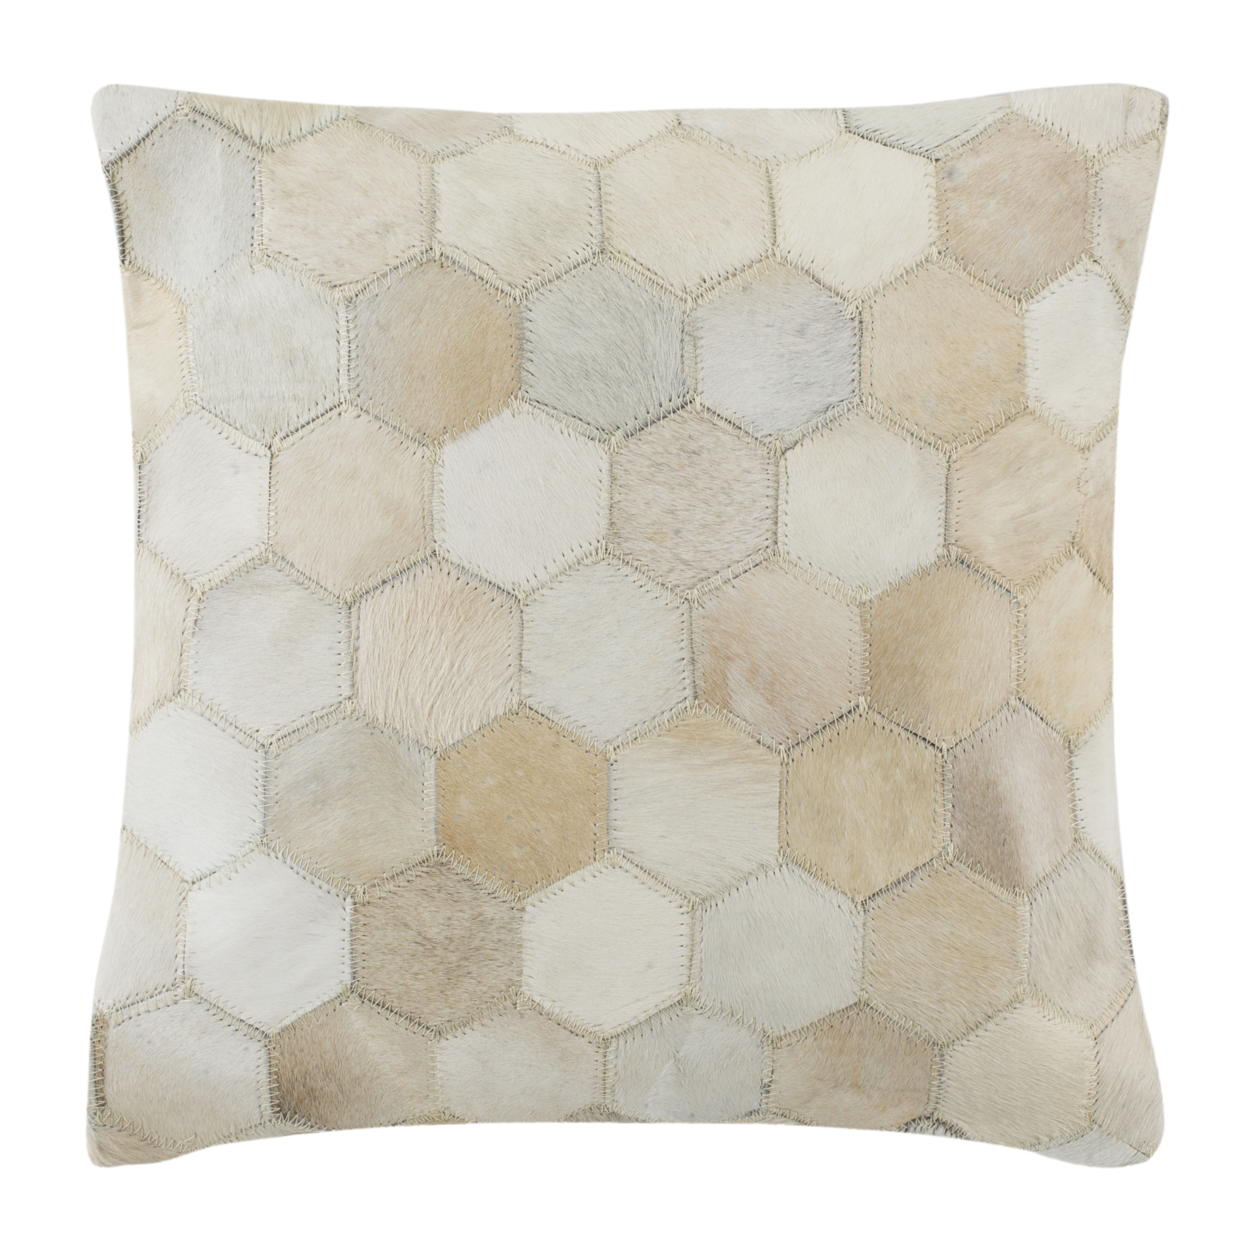 SAFAVIEH Tiled Cowhide Pillow White